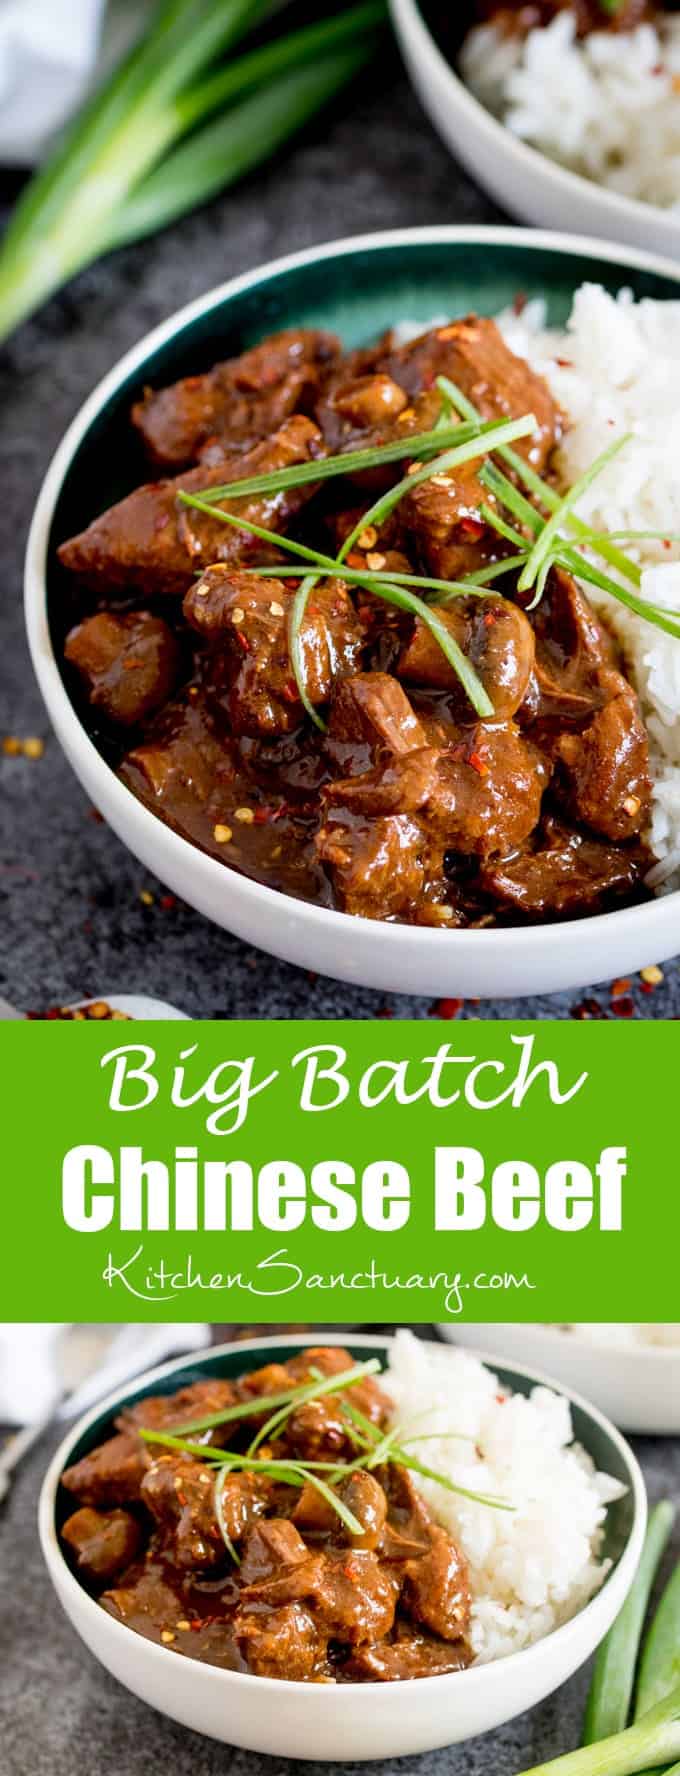 Big Batch Chinese Beef - Nicky's Kitchen Sanctuary